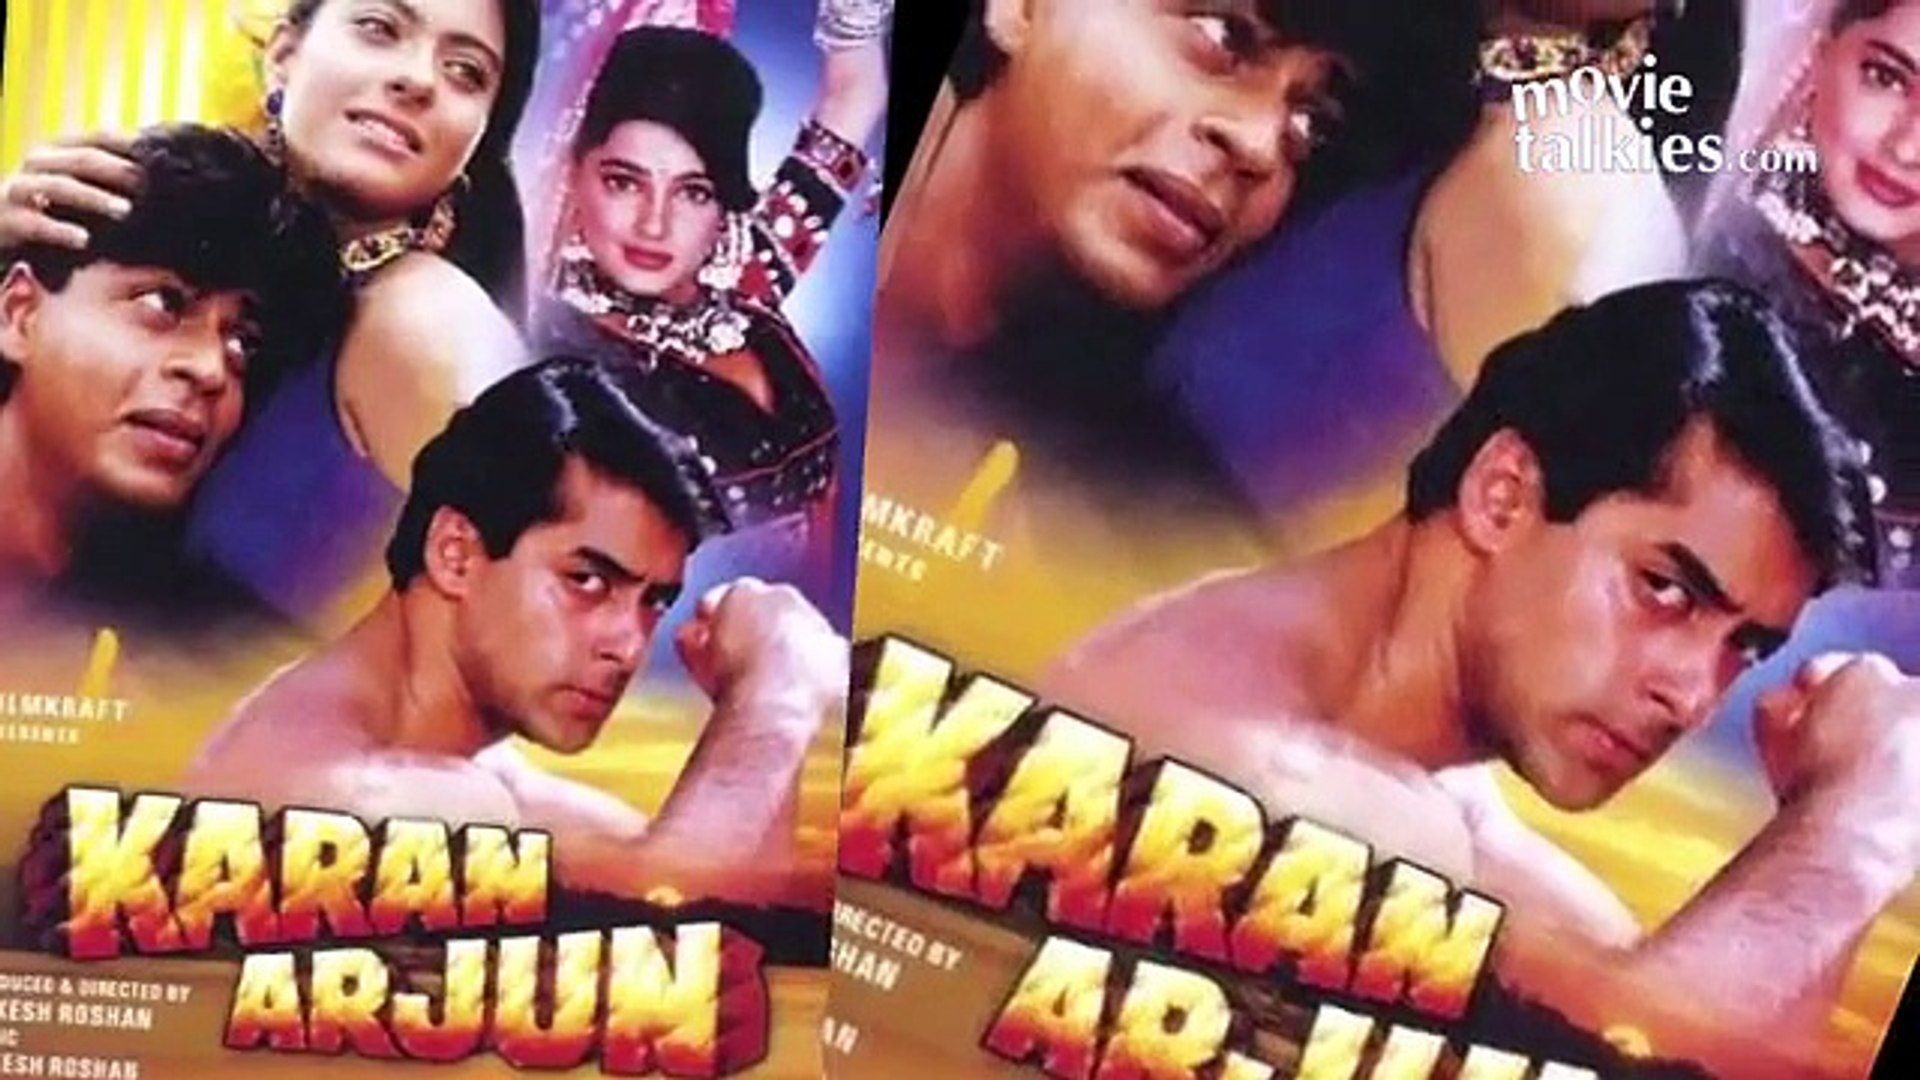 Karan Arjun 2 Official 2015 Khan, Shahrukh Khan